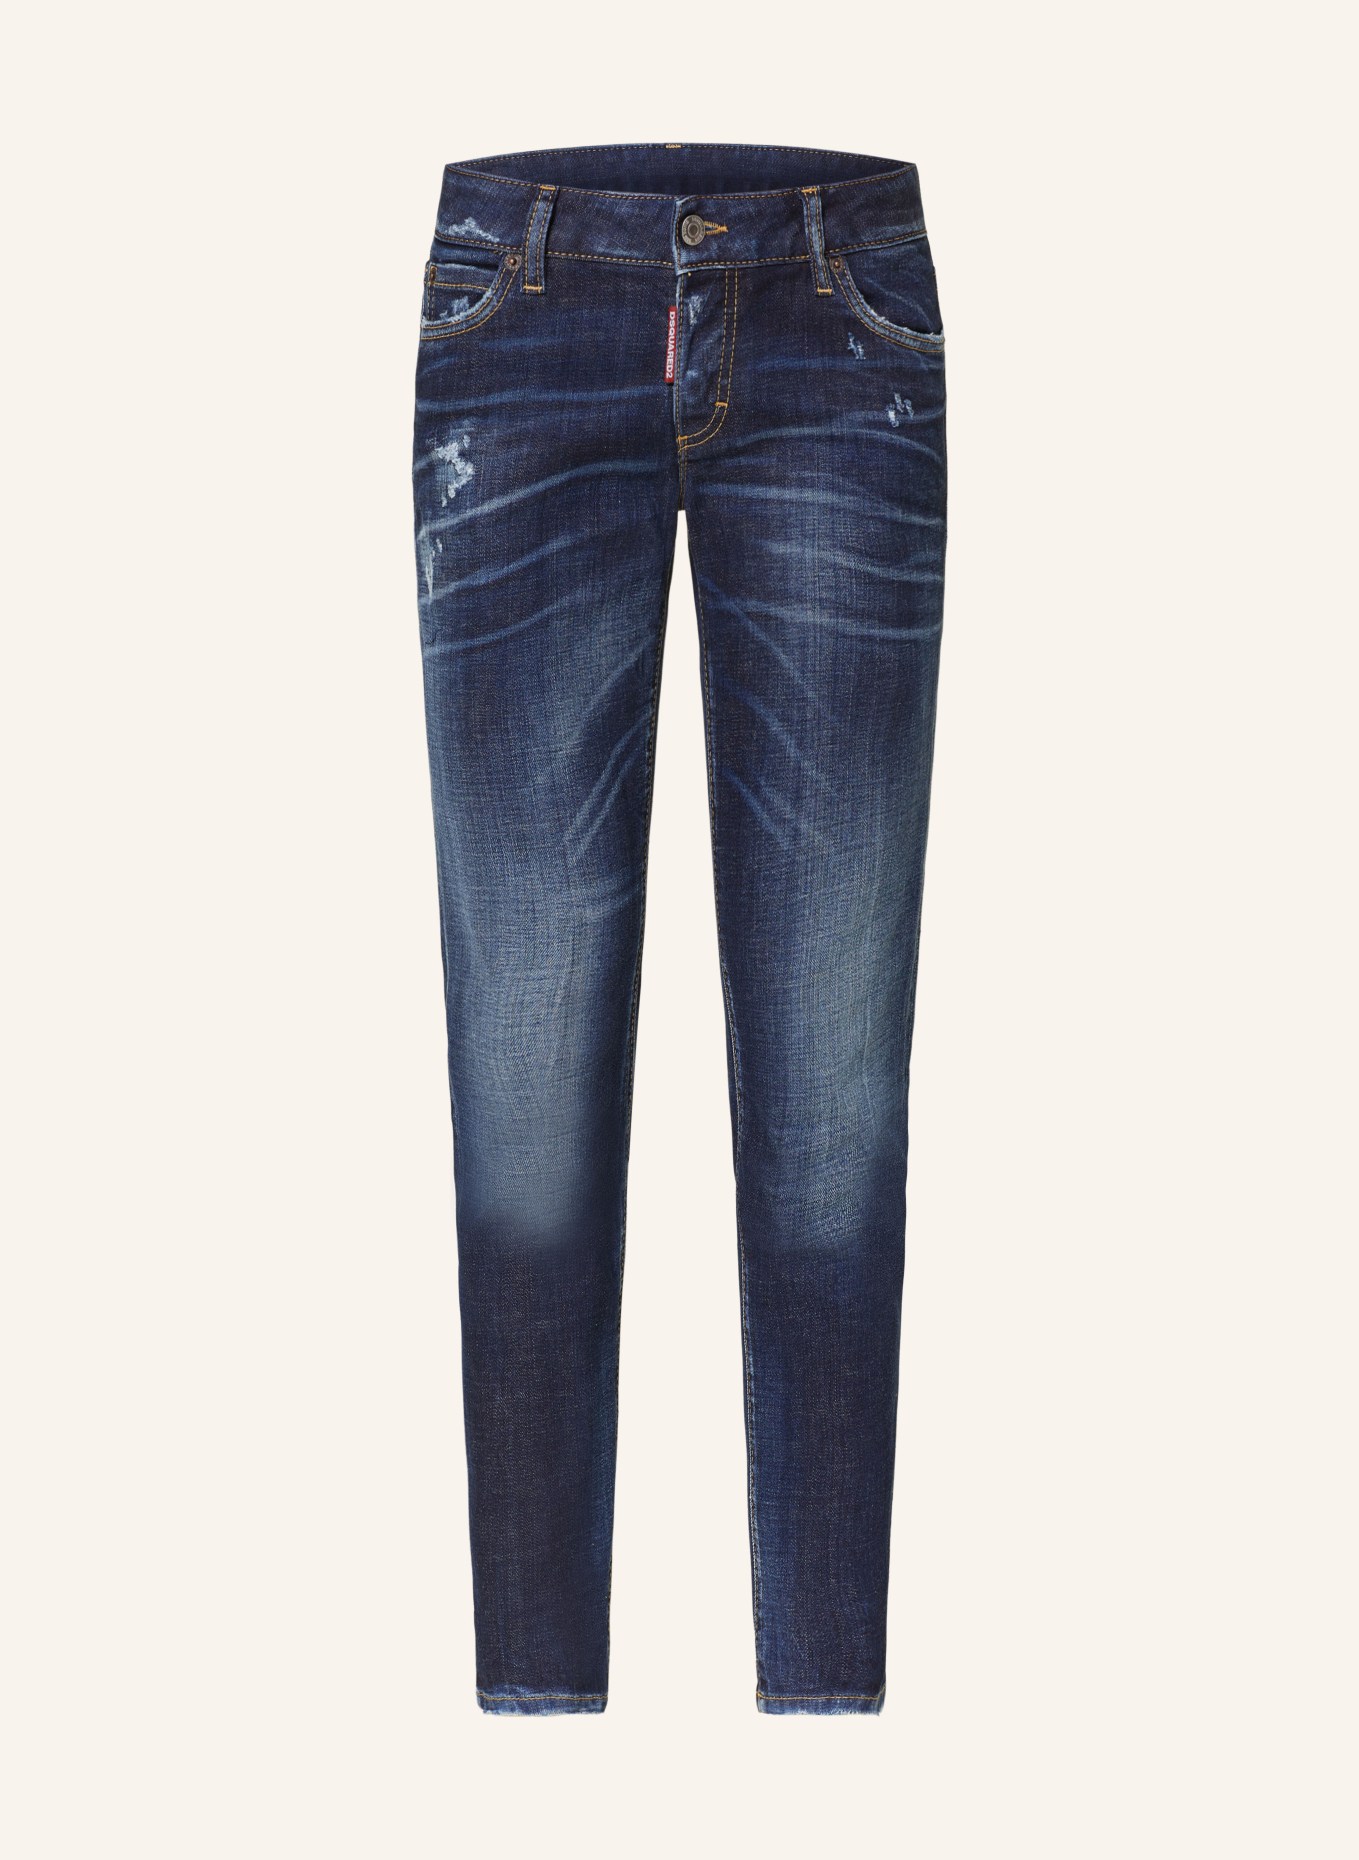 DSQUARED2 Jeans JENNIFER, Farbe: 470 NAVY BLUE (Bild 1)